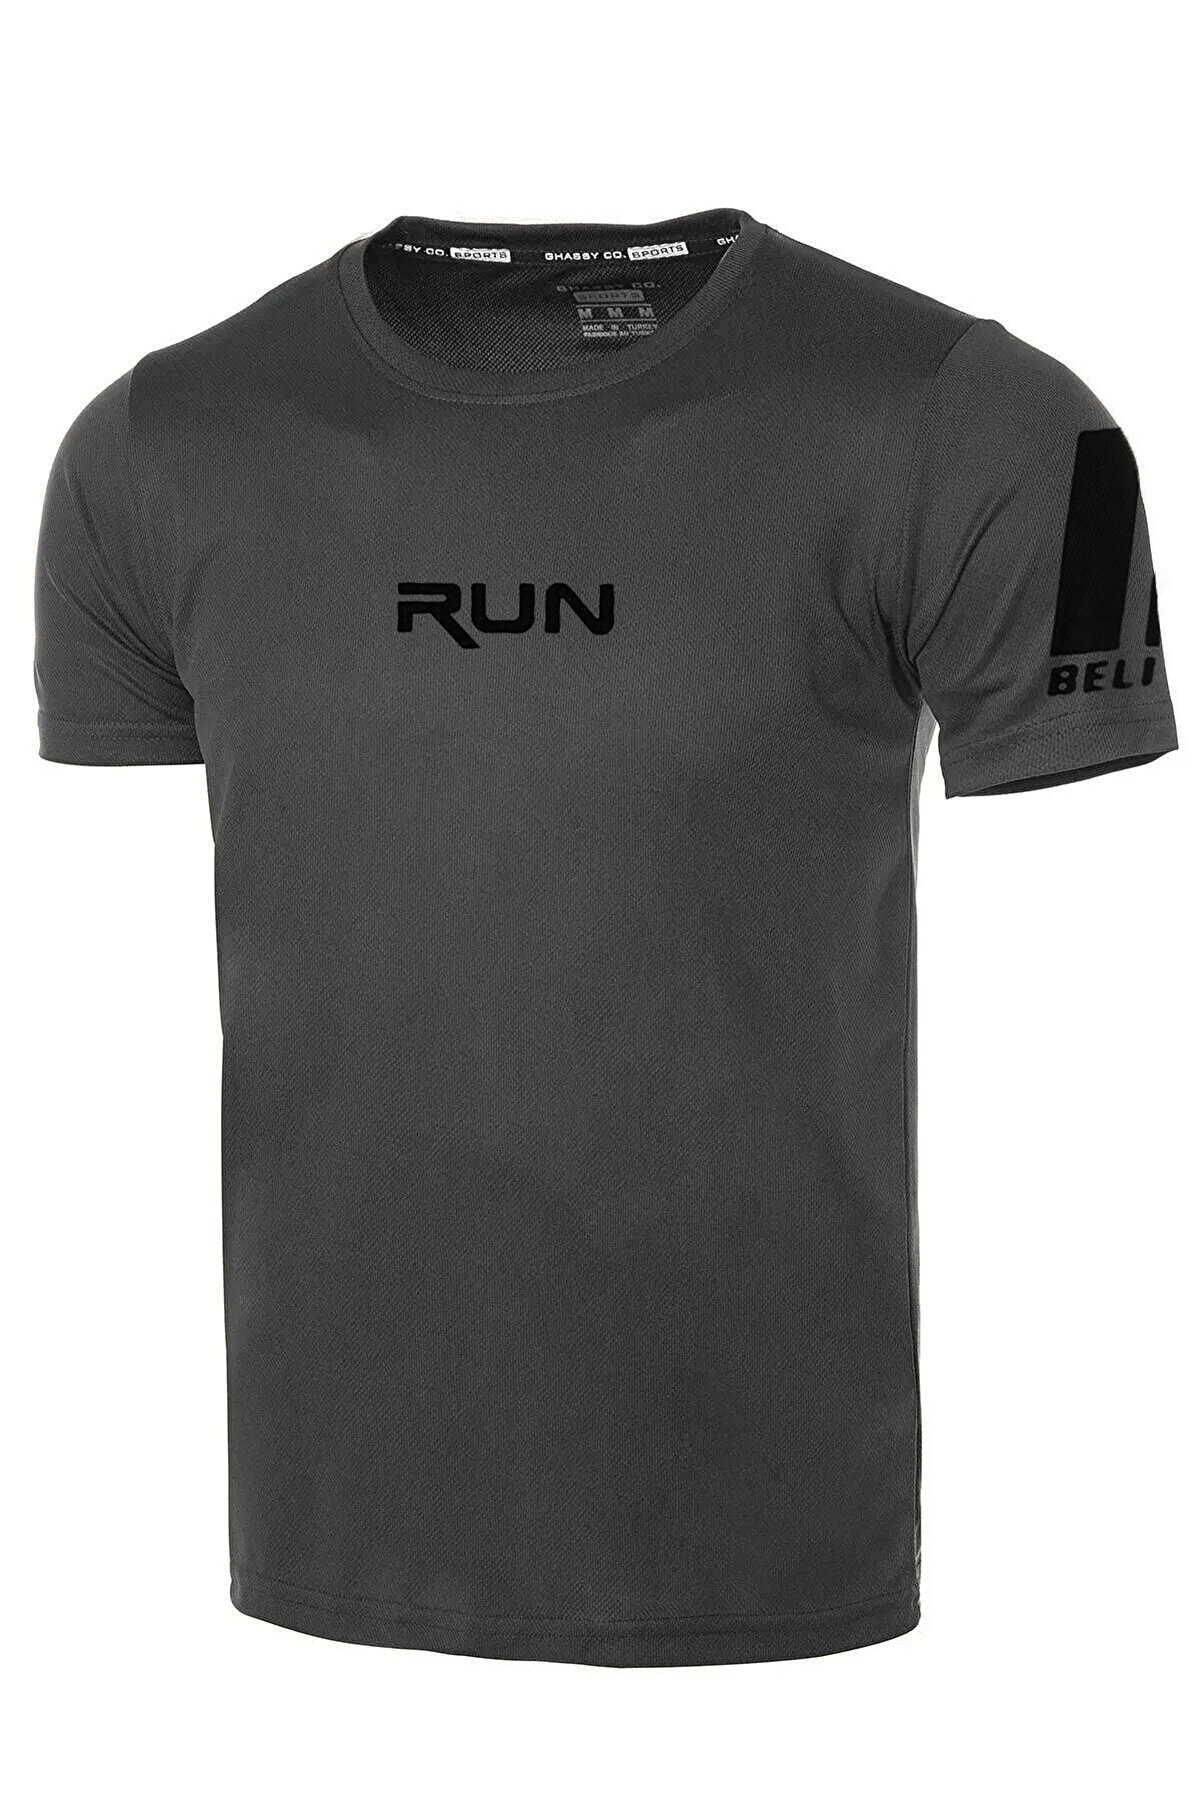 Ghassy Co Ghassy Co. Erkek Nem Emici Hızlı Kuruma Performans Running Spor T-shirt - FÜME